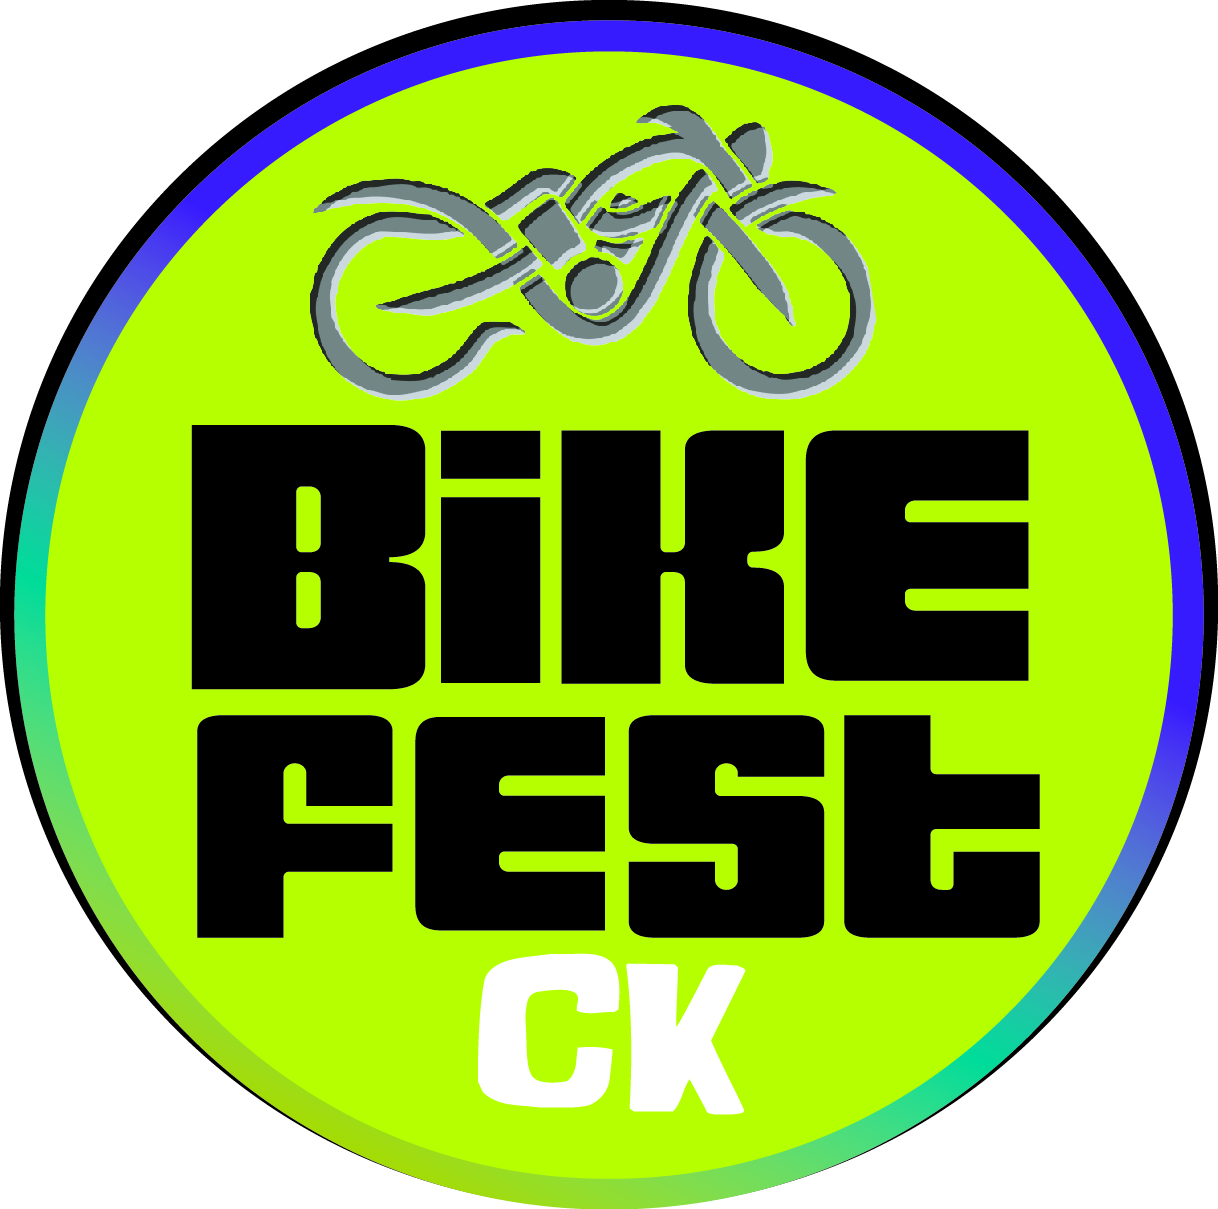 bike fest logo FINALNO YEAR CK Today Travel Guide & Calendar